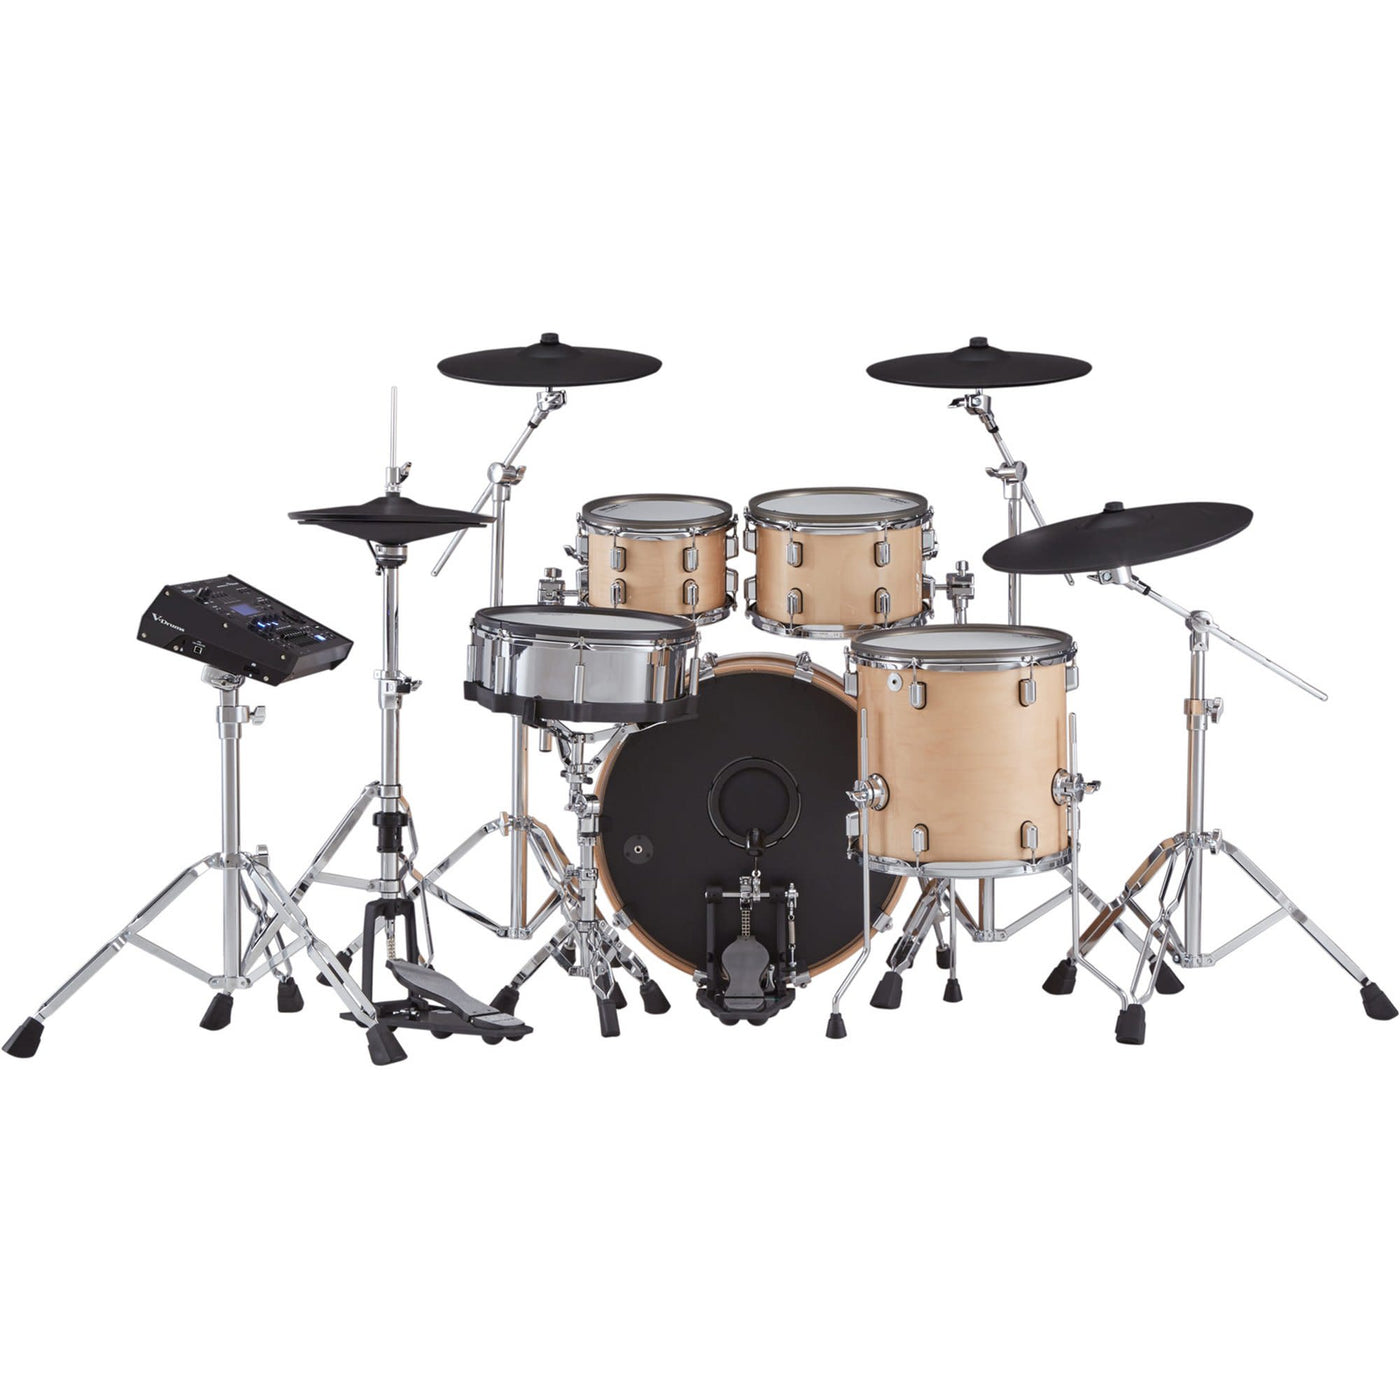 Roland VAD706-2GN V-Drums Acoustic Design Electronic Drum Set - Gloss Natural Finish